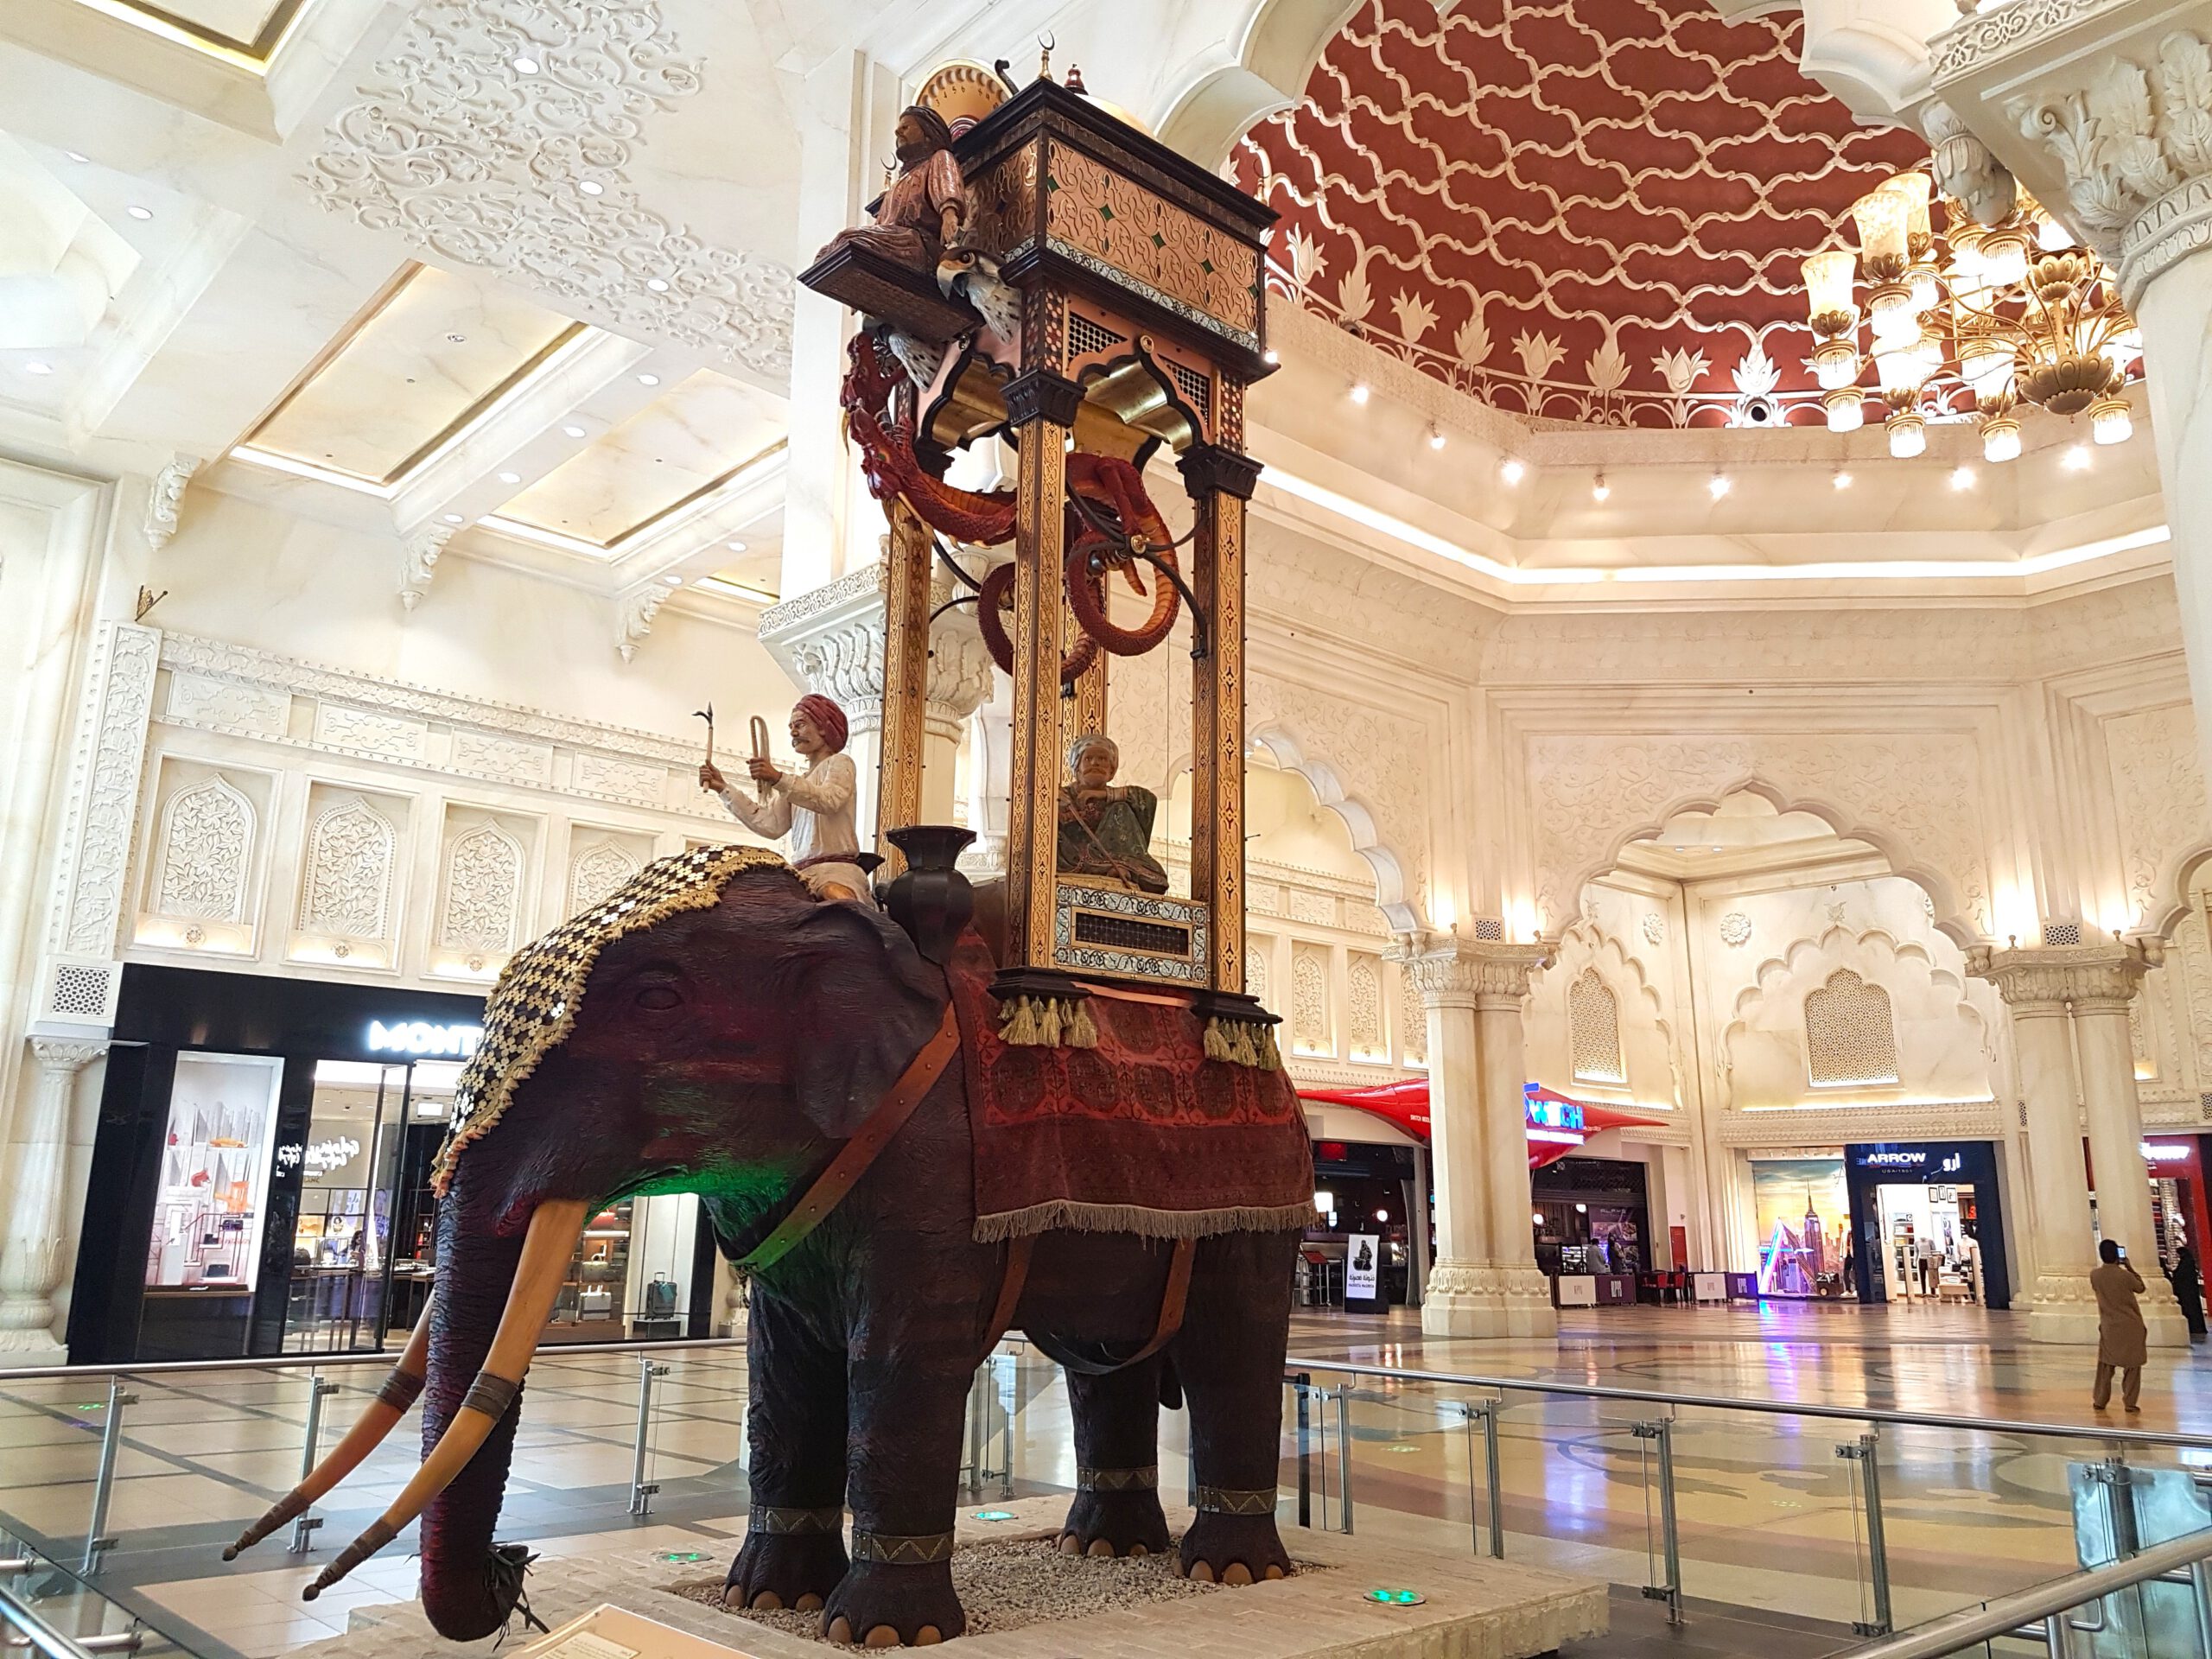 Ibn Battuta Mall in Dubai - India Court